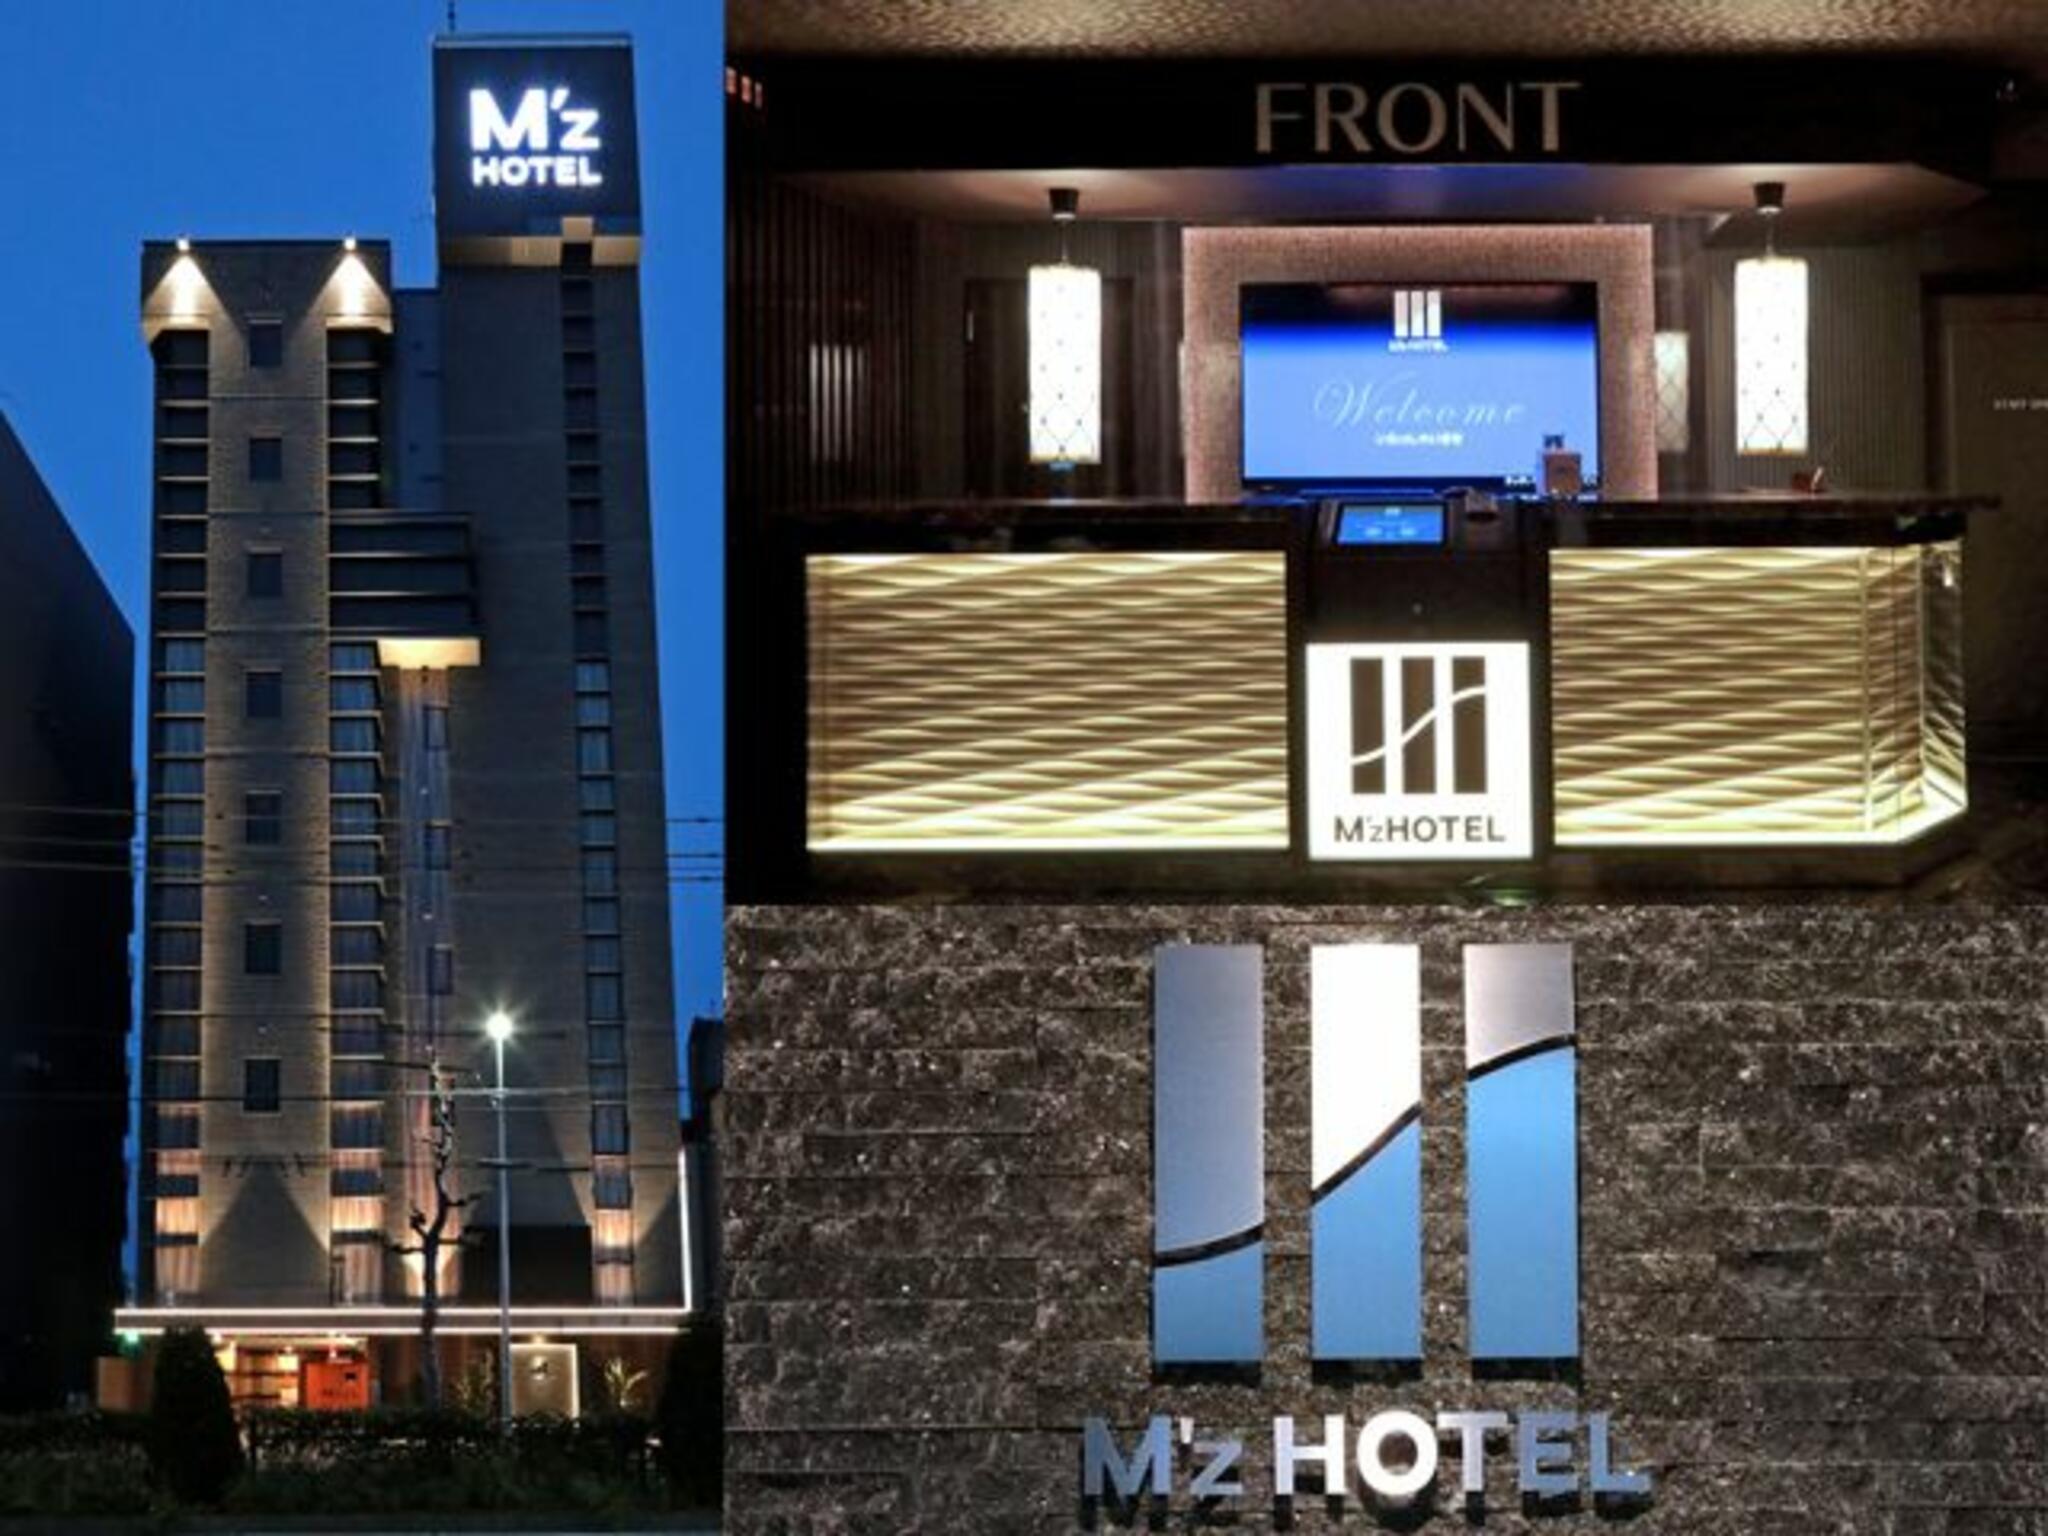 M‘z HOTEL(エムズ ホテル)の代表写真3